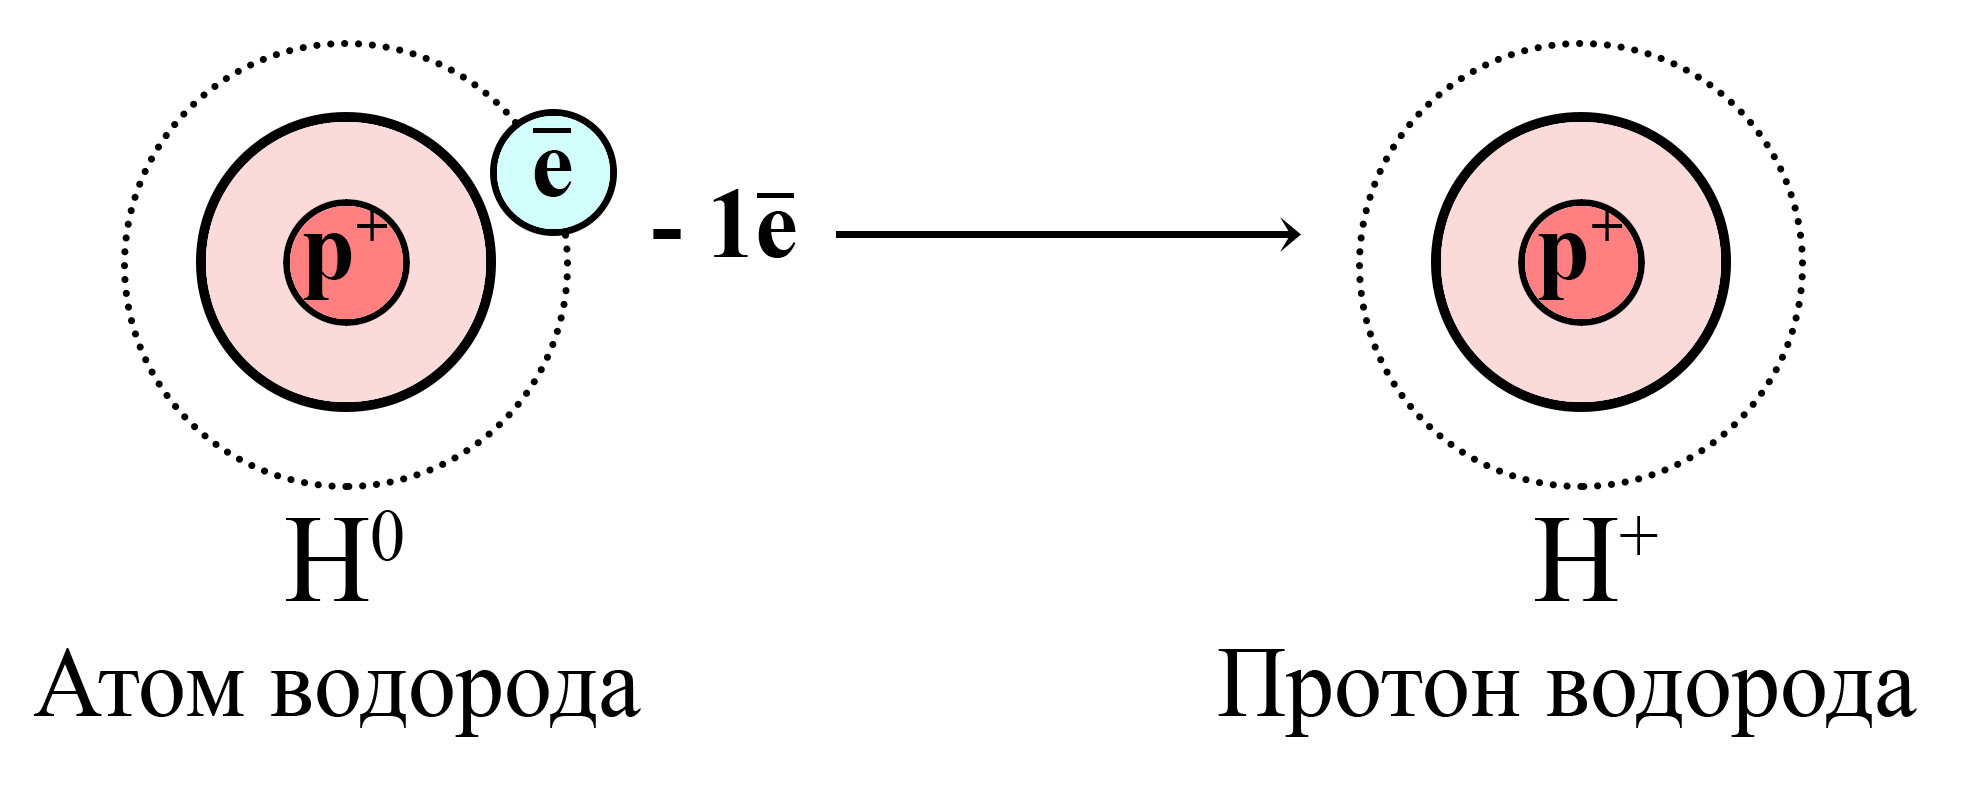 Окисление атома водорода и образование катиона (протона) водорода